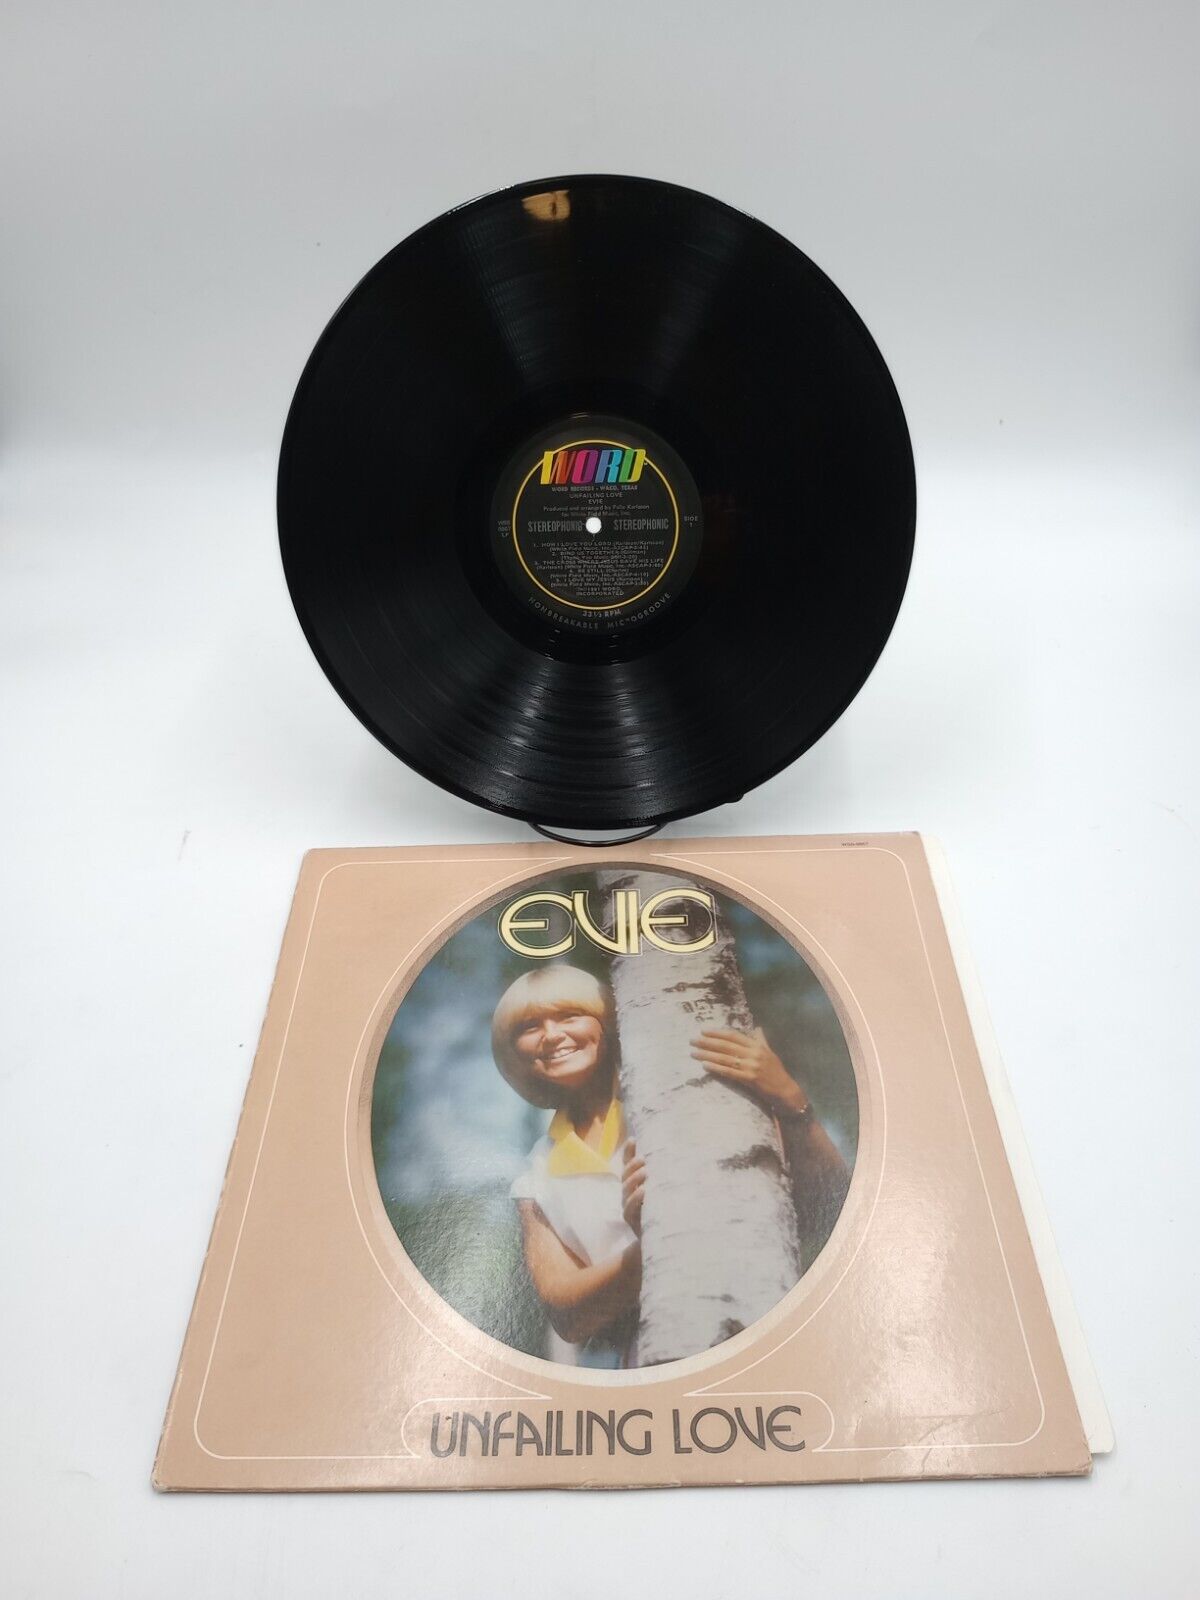 BOXDG25 Evie Unfailing Love LP  Word WSB-8867  1981 Australia